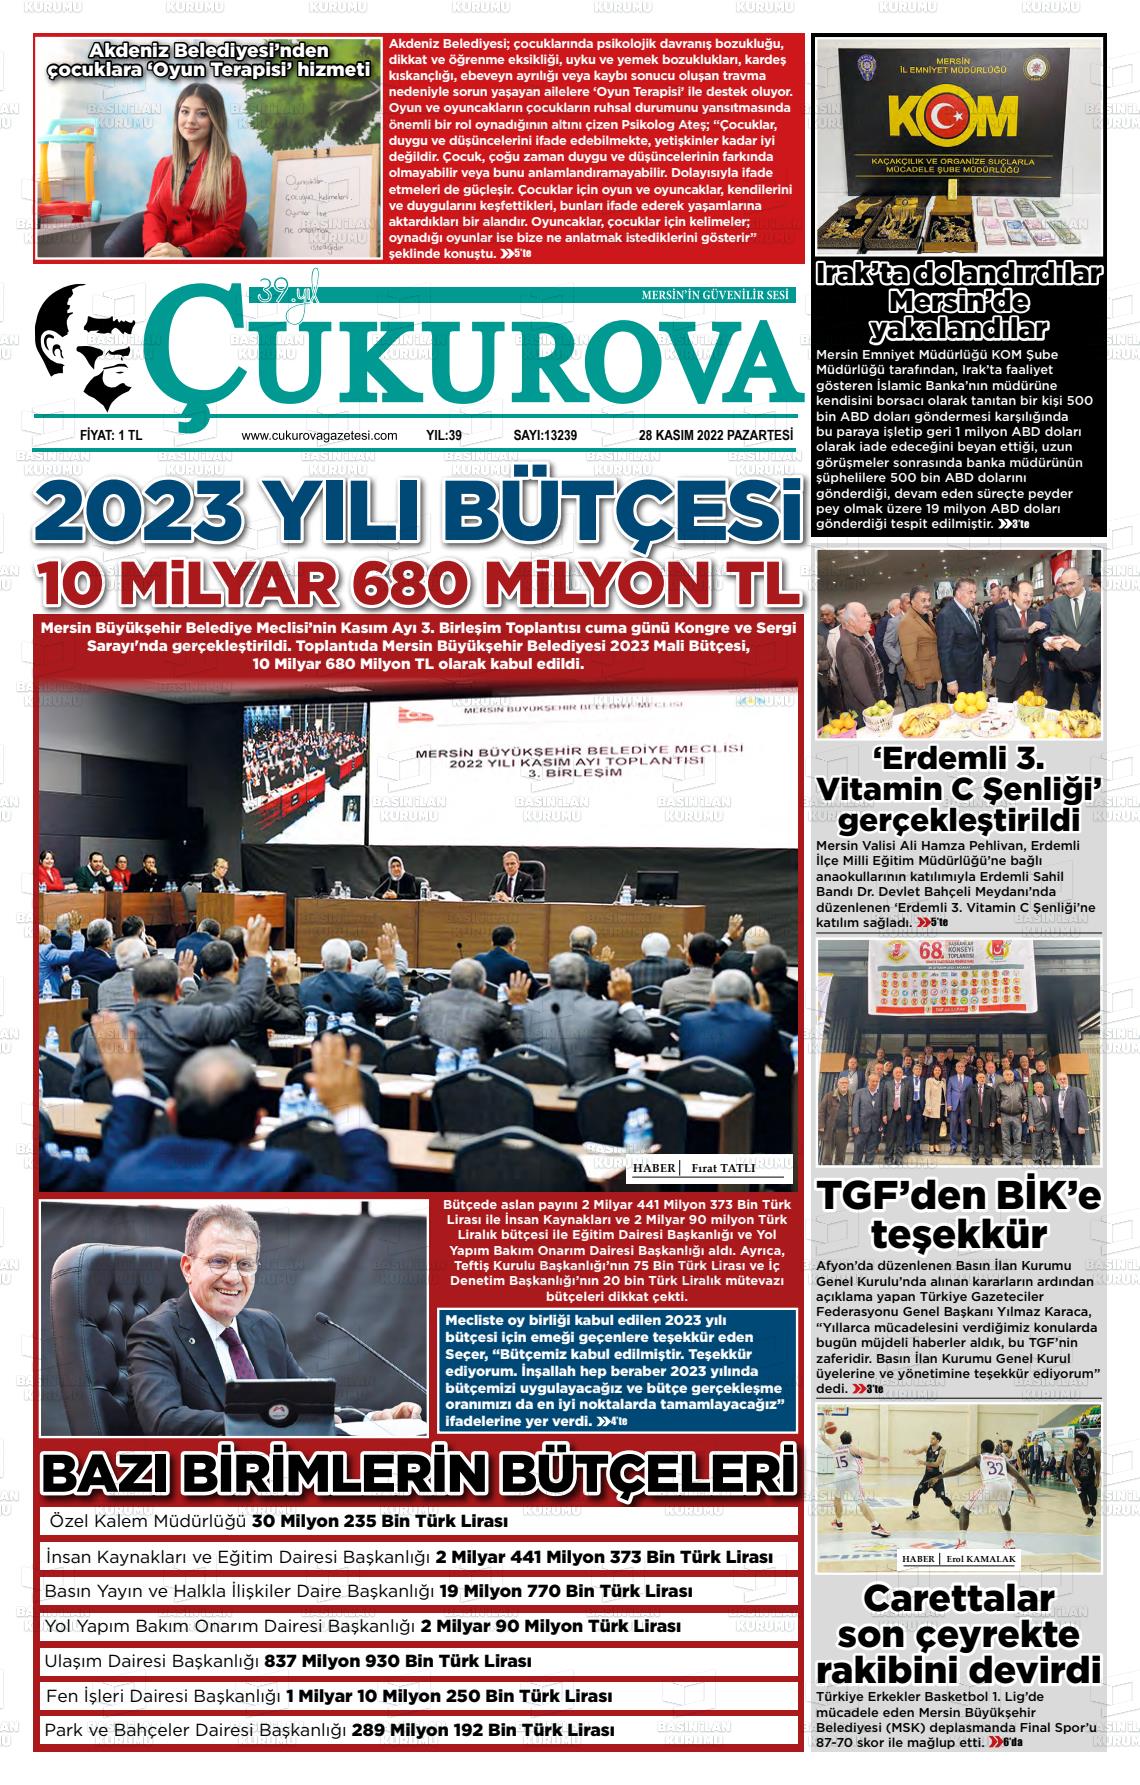 28 Kasım 2022 Çukurova Gazete Manşeti